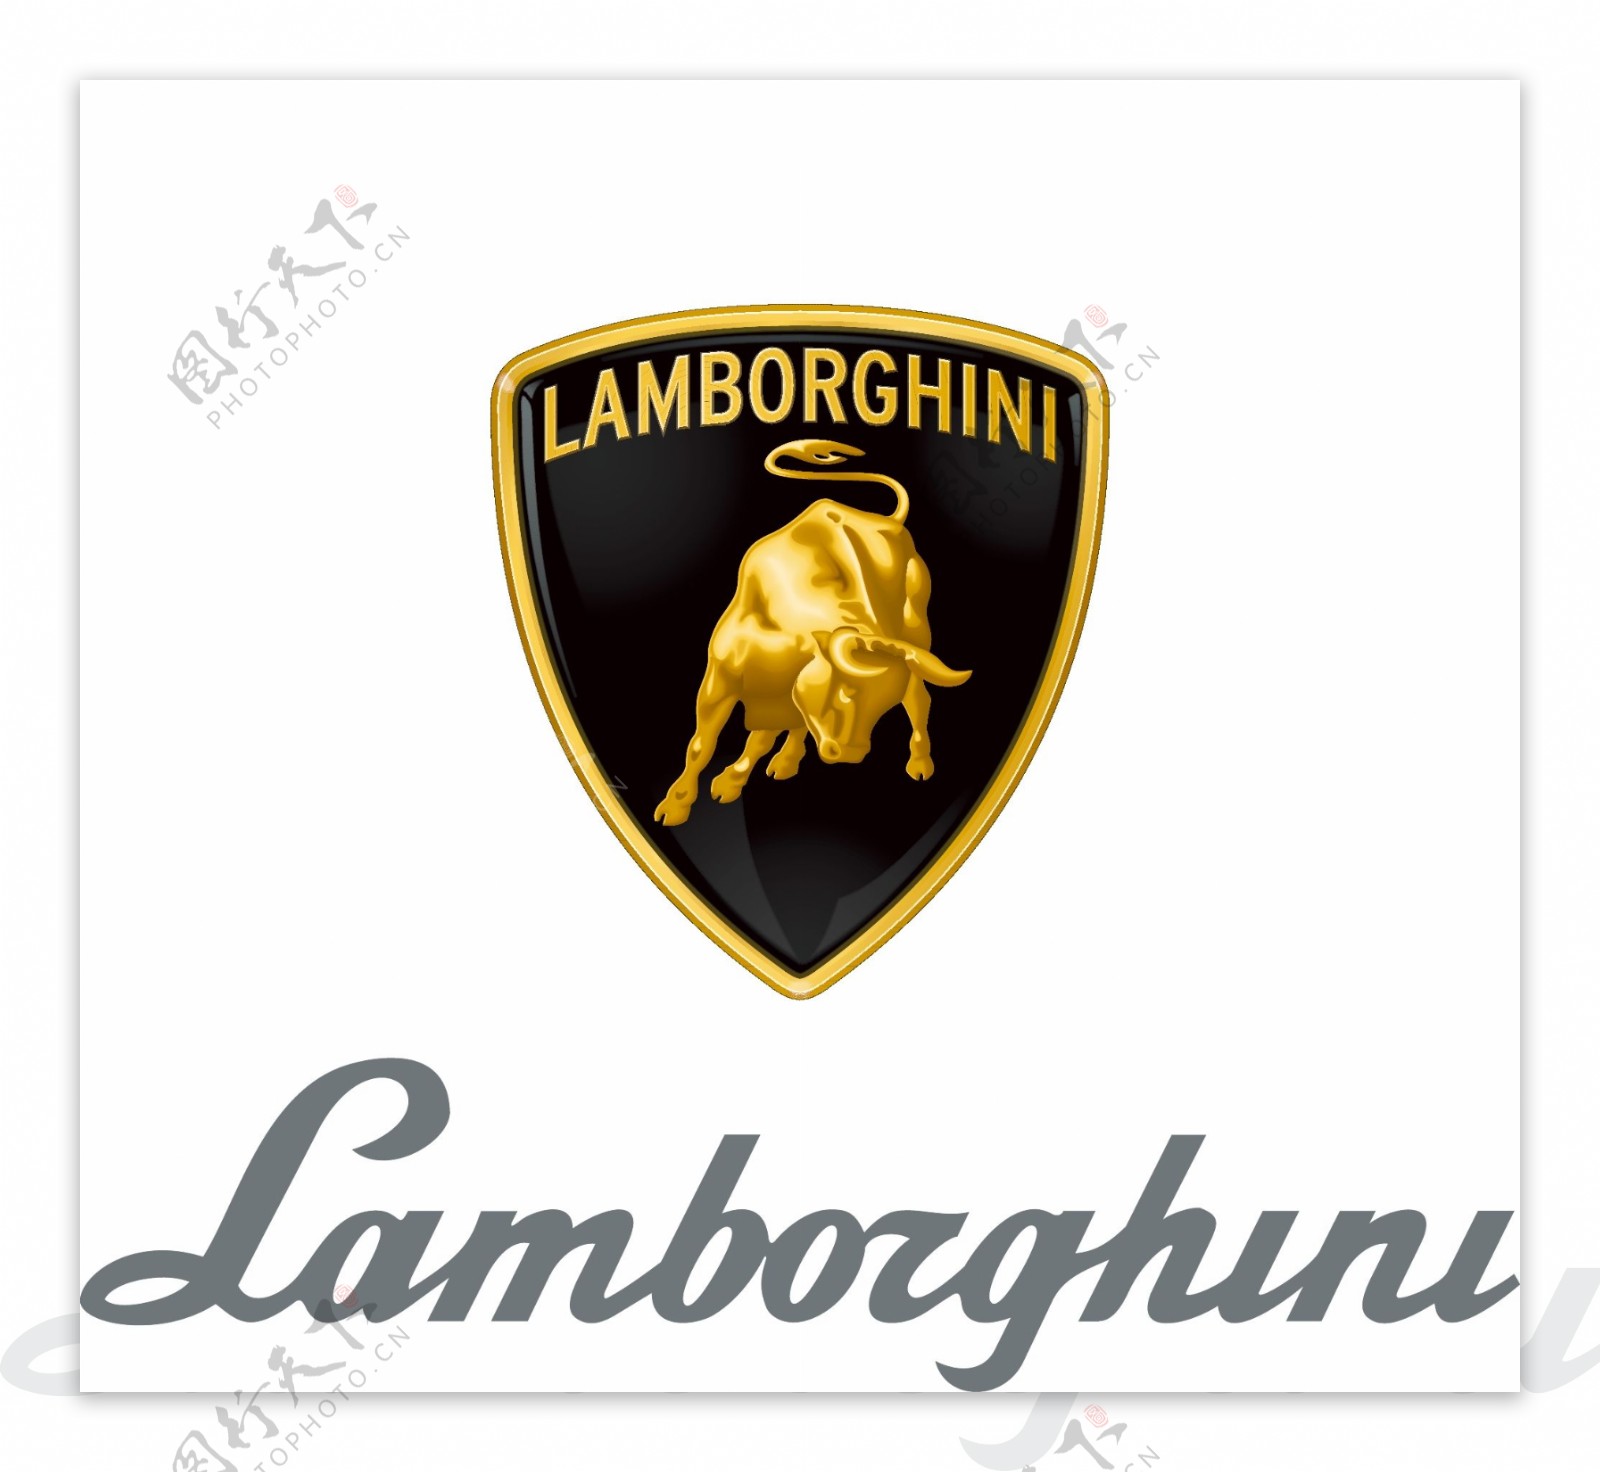 Lamborghini Logo, symbol, meaning, history, PNG, brand